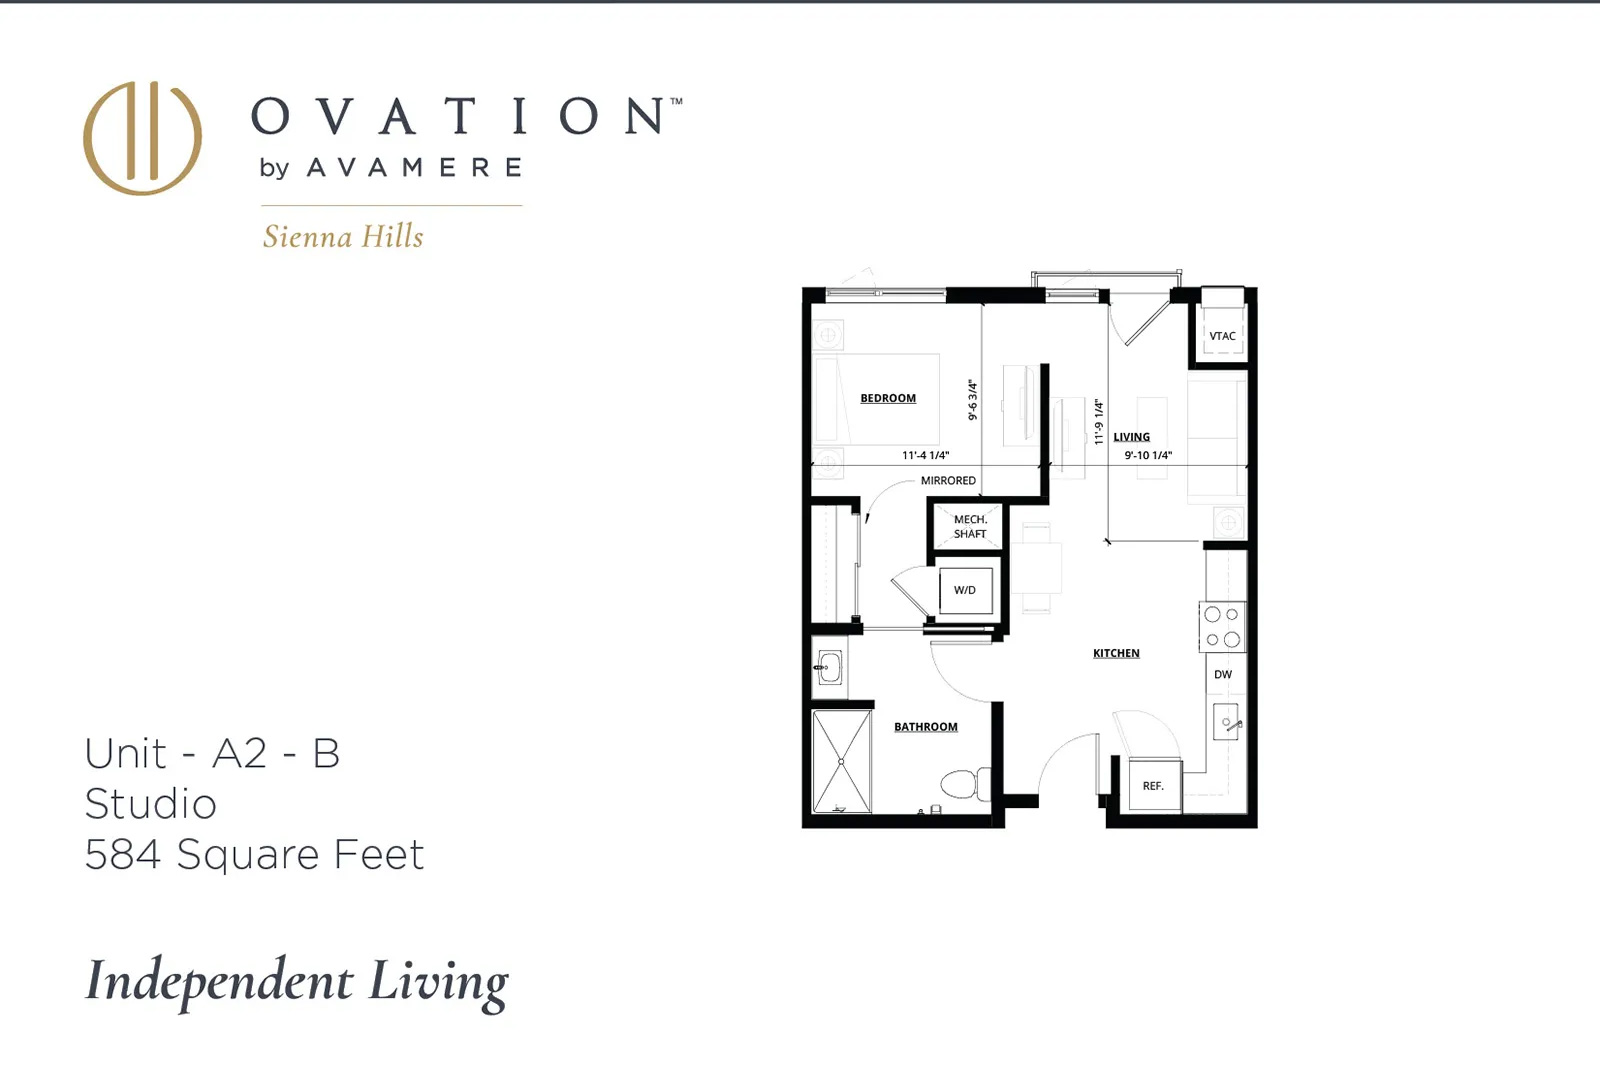 Ovation Sienna Hills Independent Living Floorplan Studio 584 sq ft